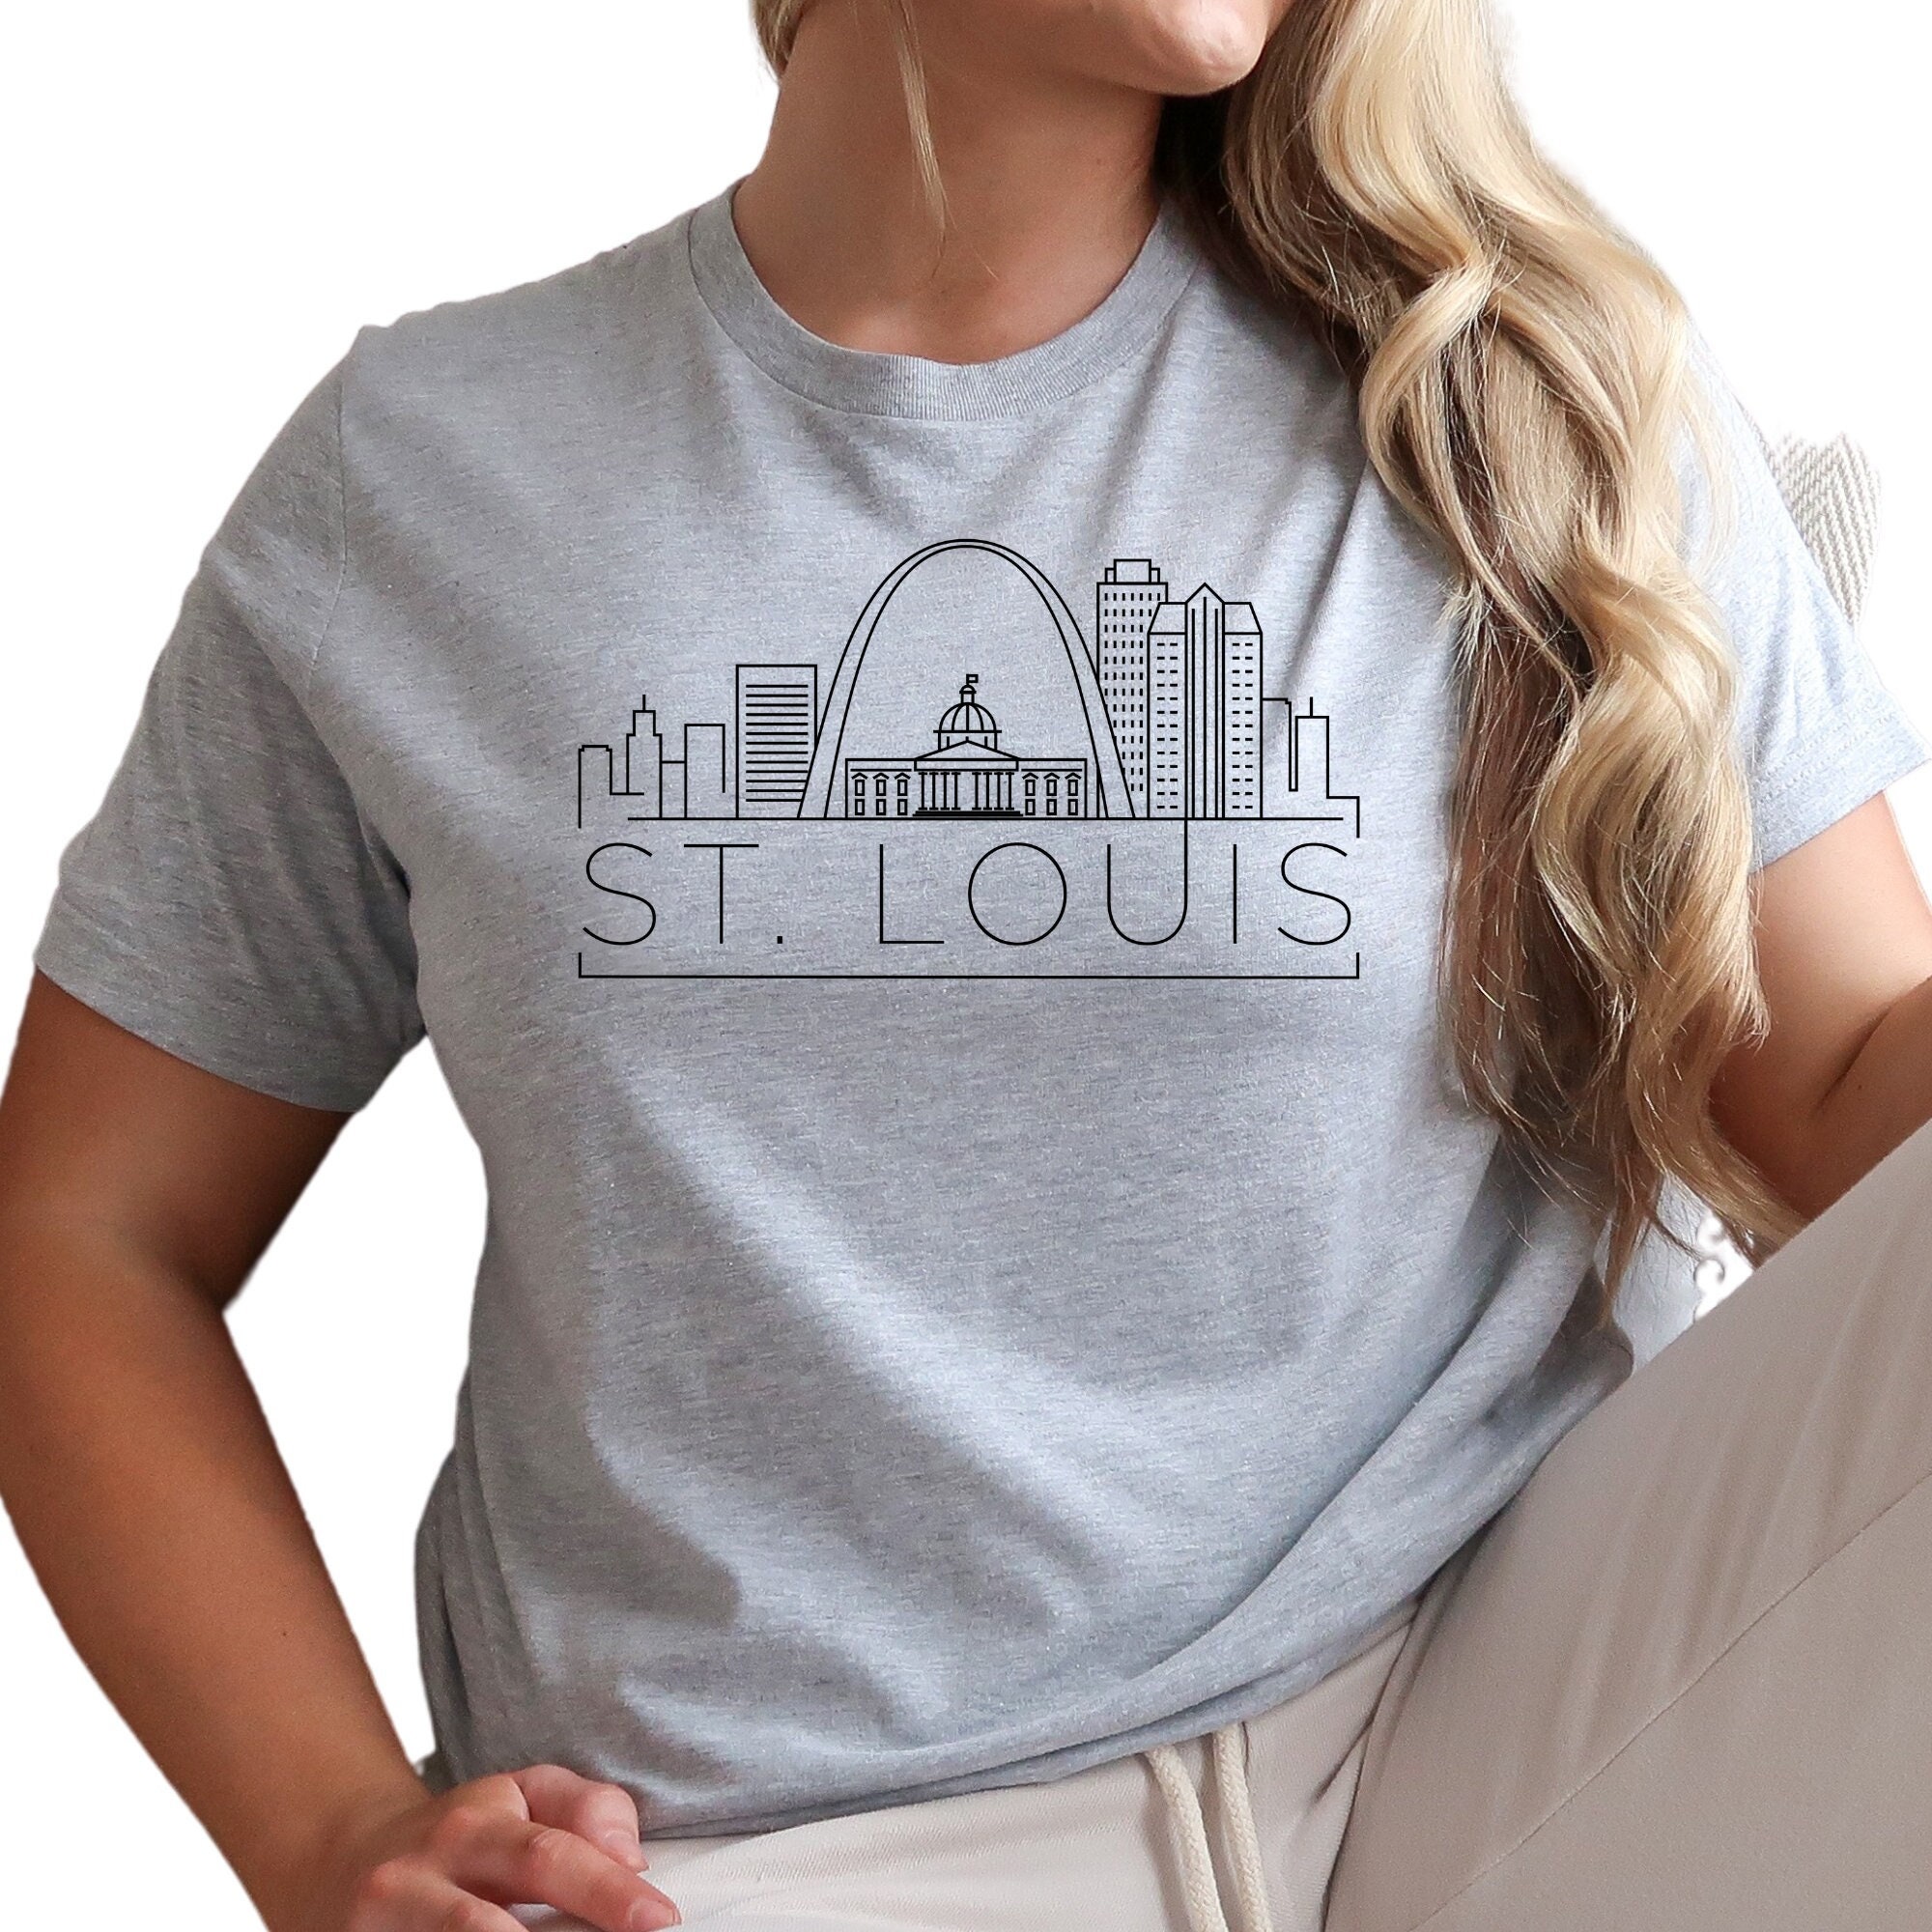 Retro St. Louis Arch Unisex Long Sleeve T-Shirt - Royal